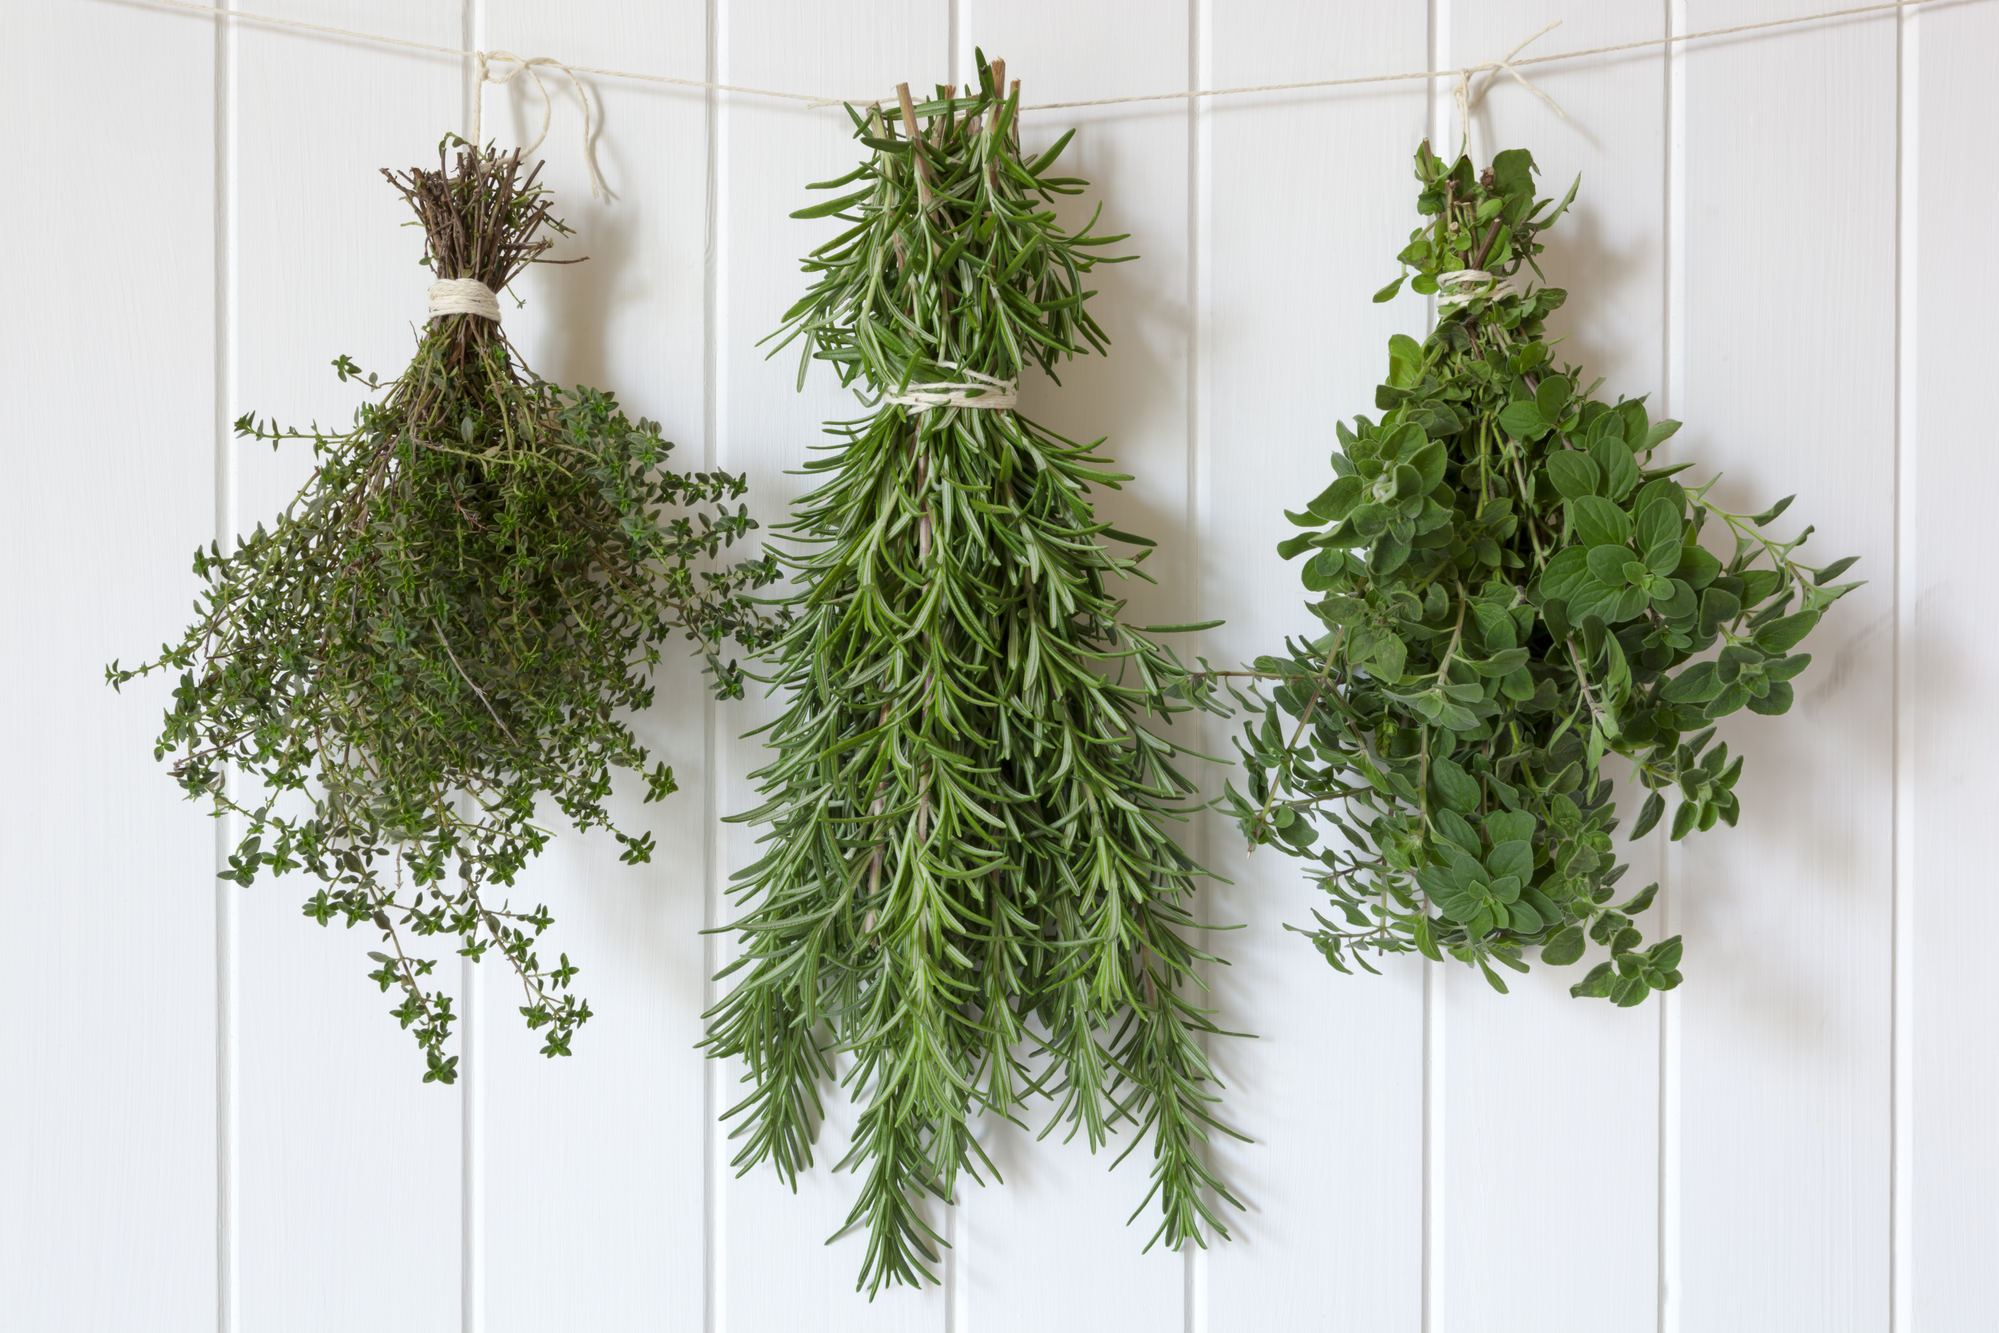 Three tricks to make your fresh herbs last year-round